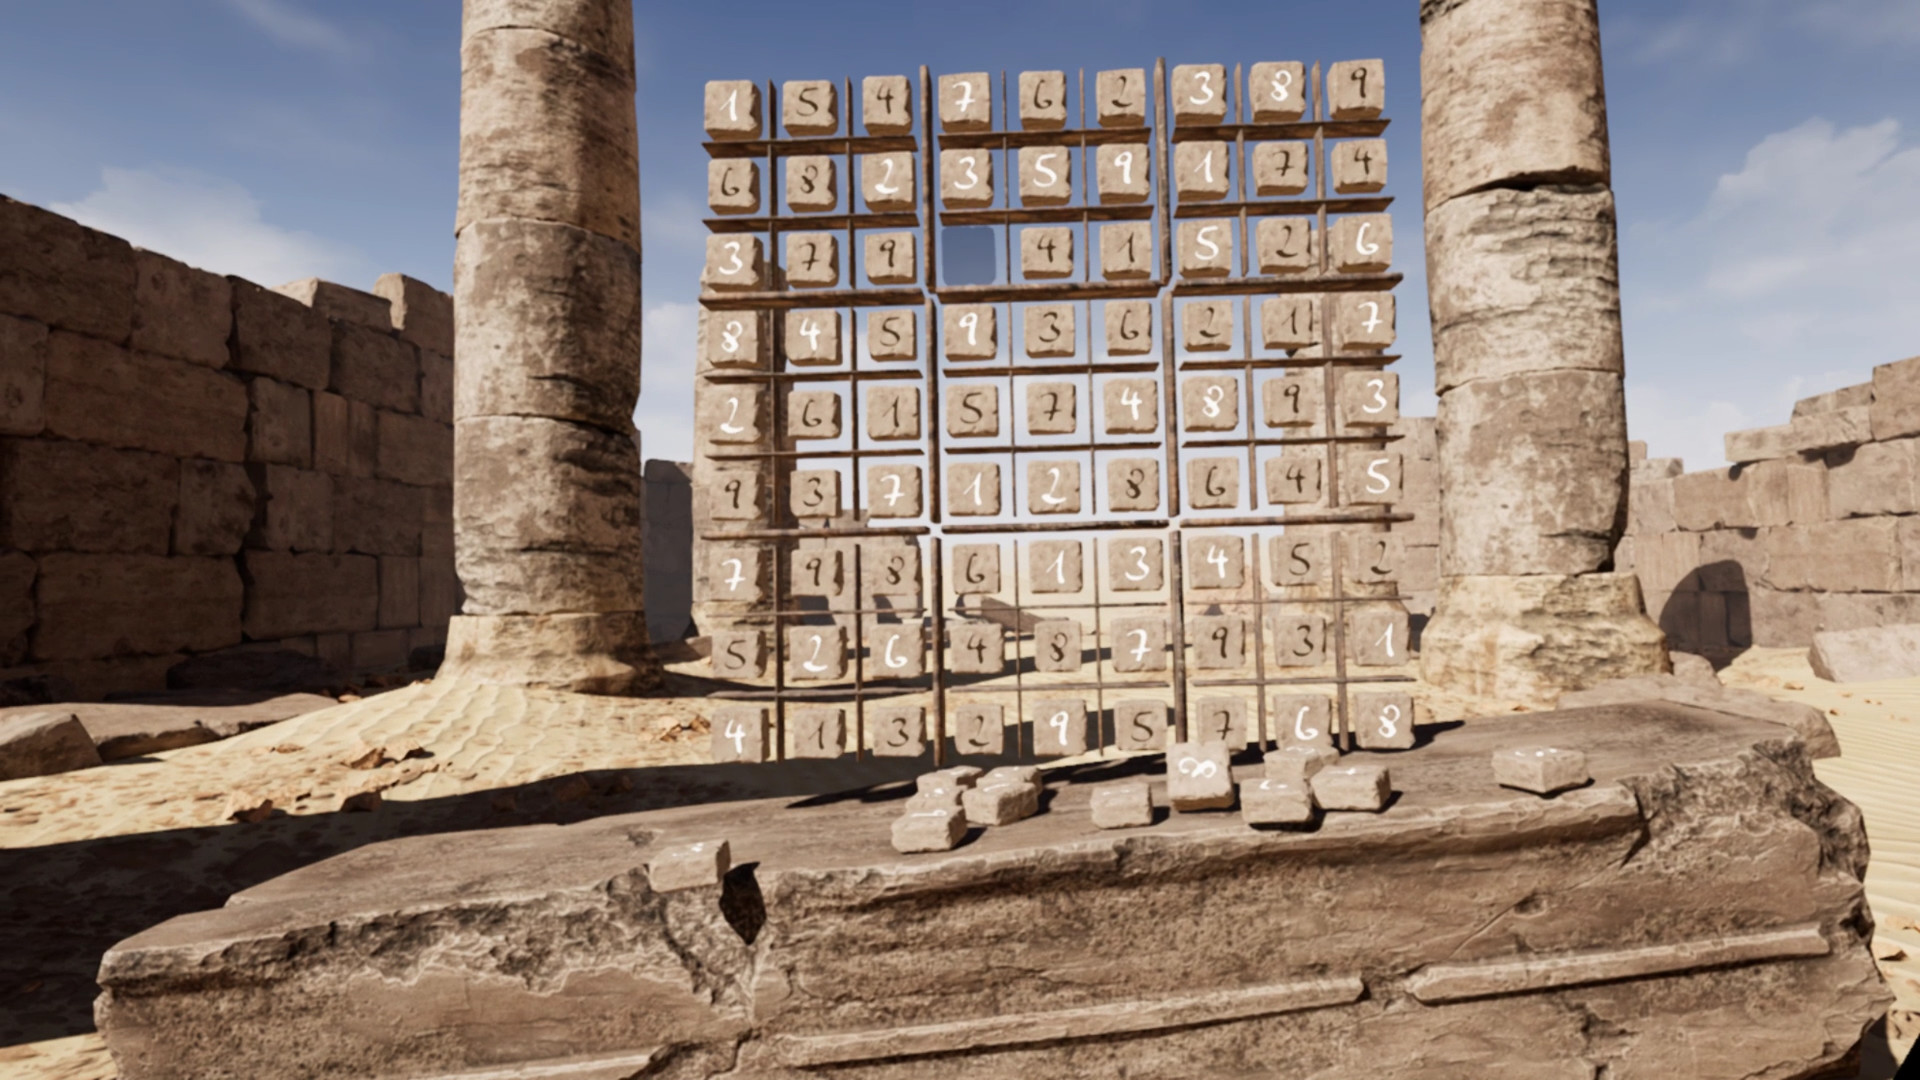 Arabian Stones - The VR Sudoku Game Free Download